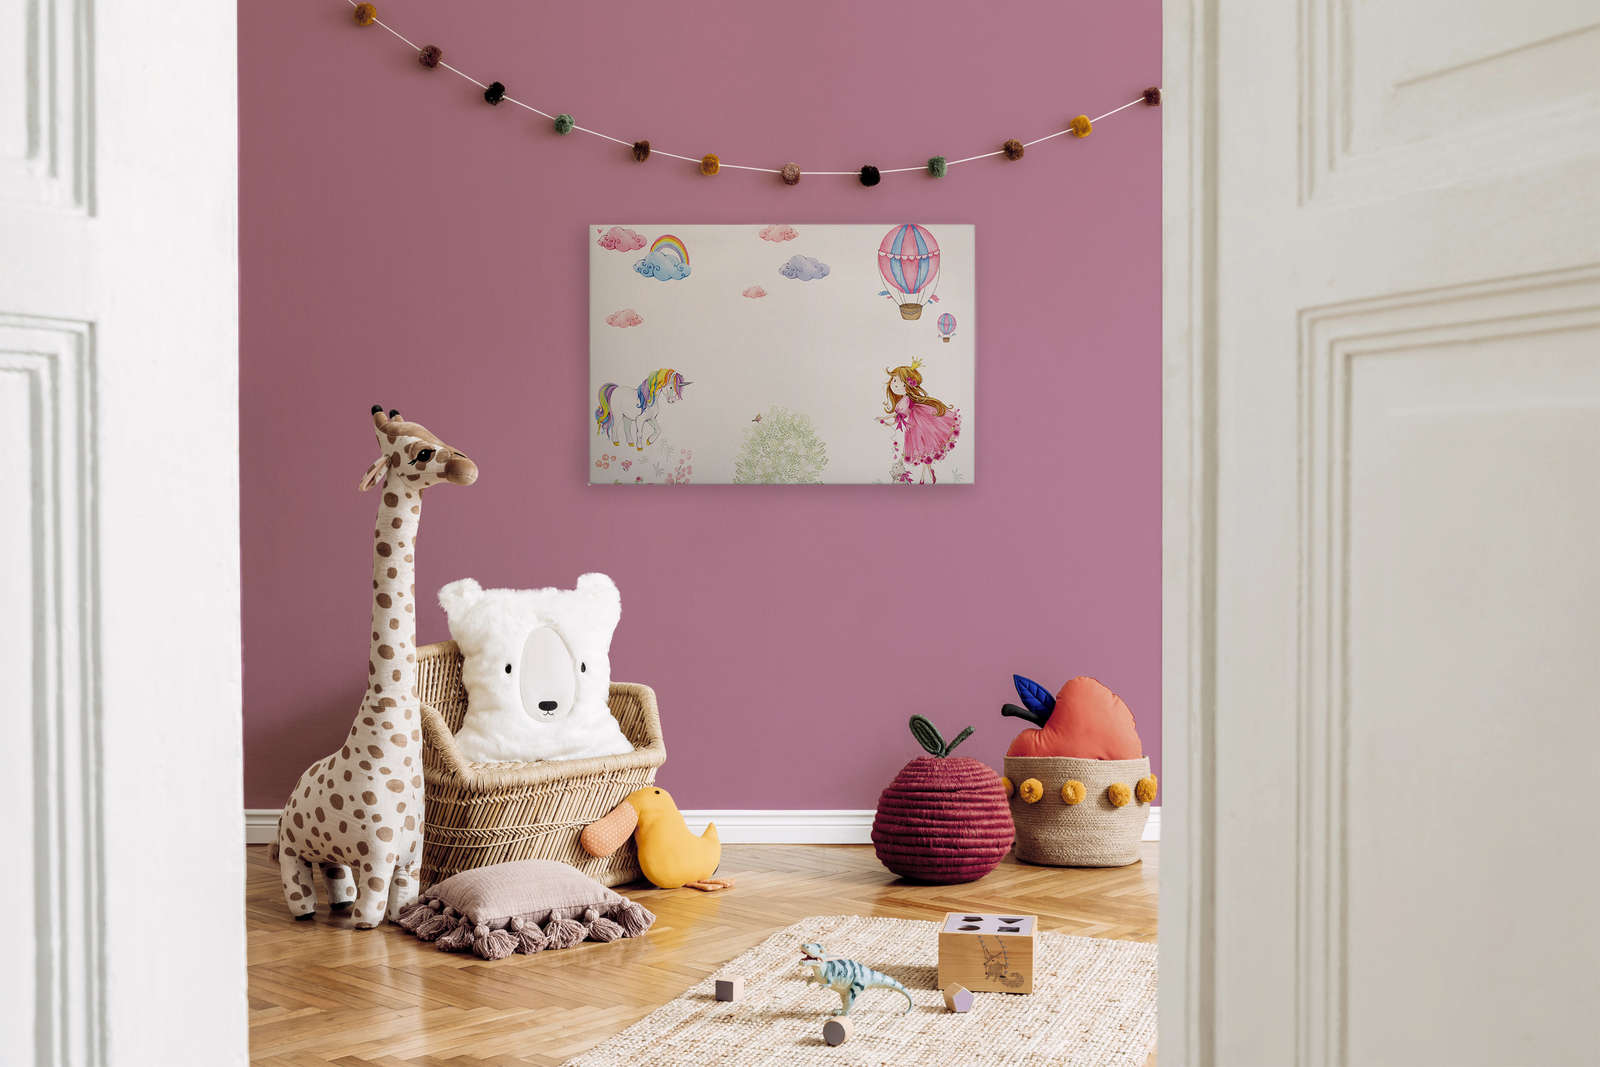             Canvas painting Nursery with princess and unicorn - 0,90 m x 0,60 m
        